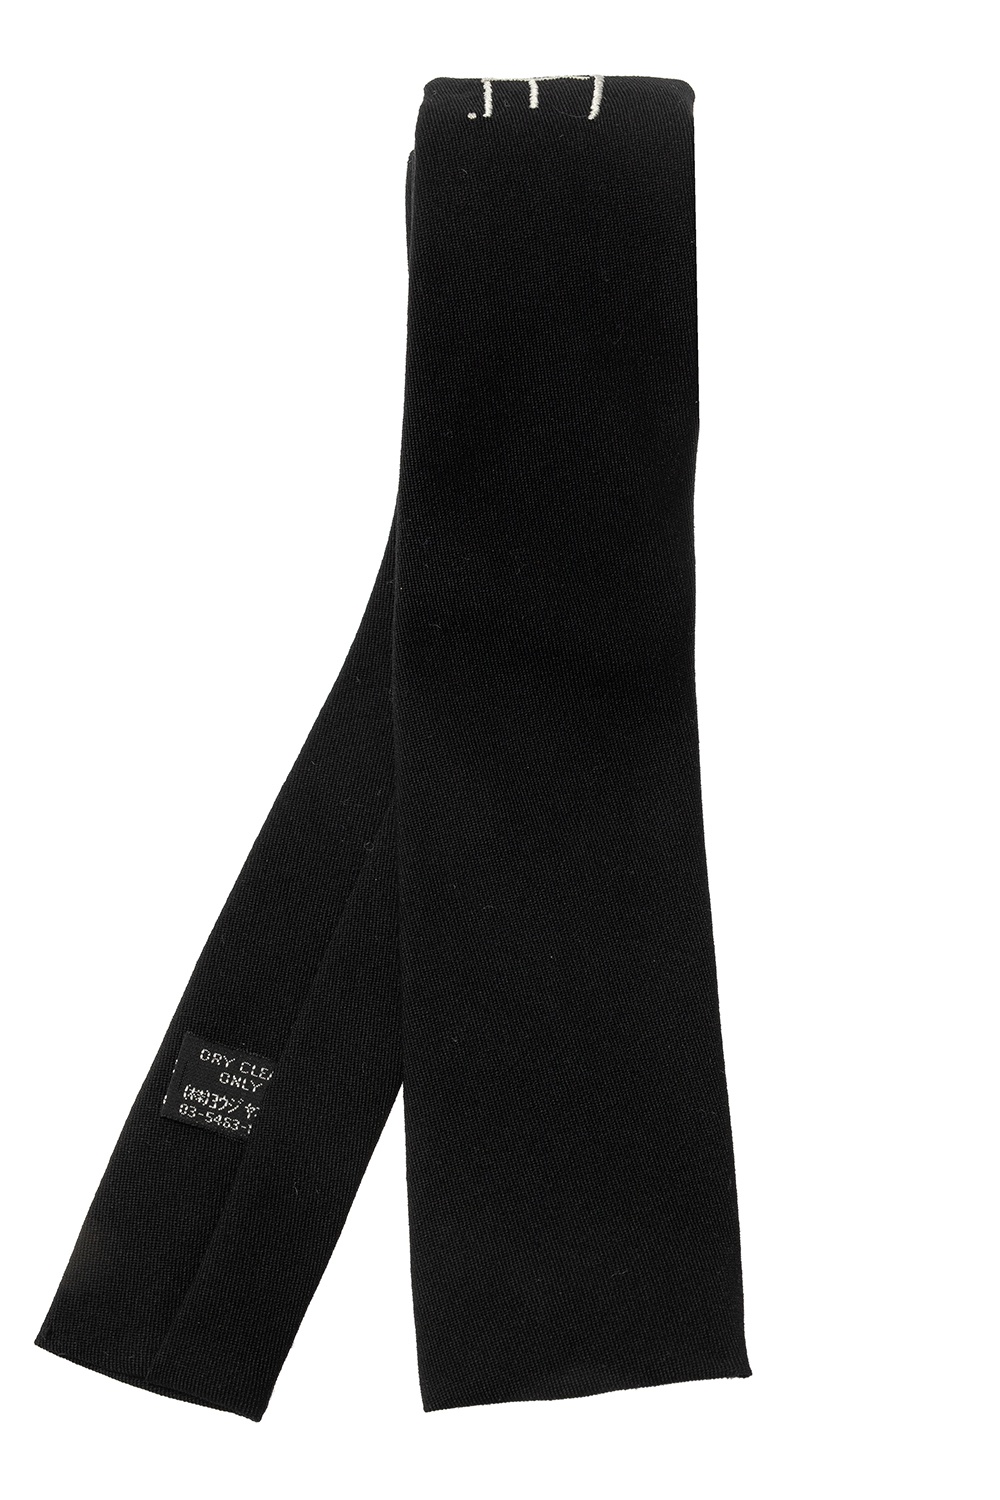 Yohji Yamamoto Wool tie